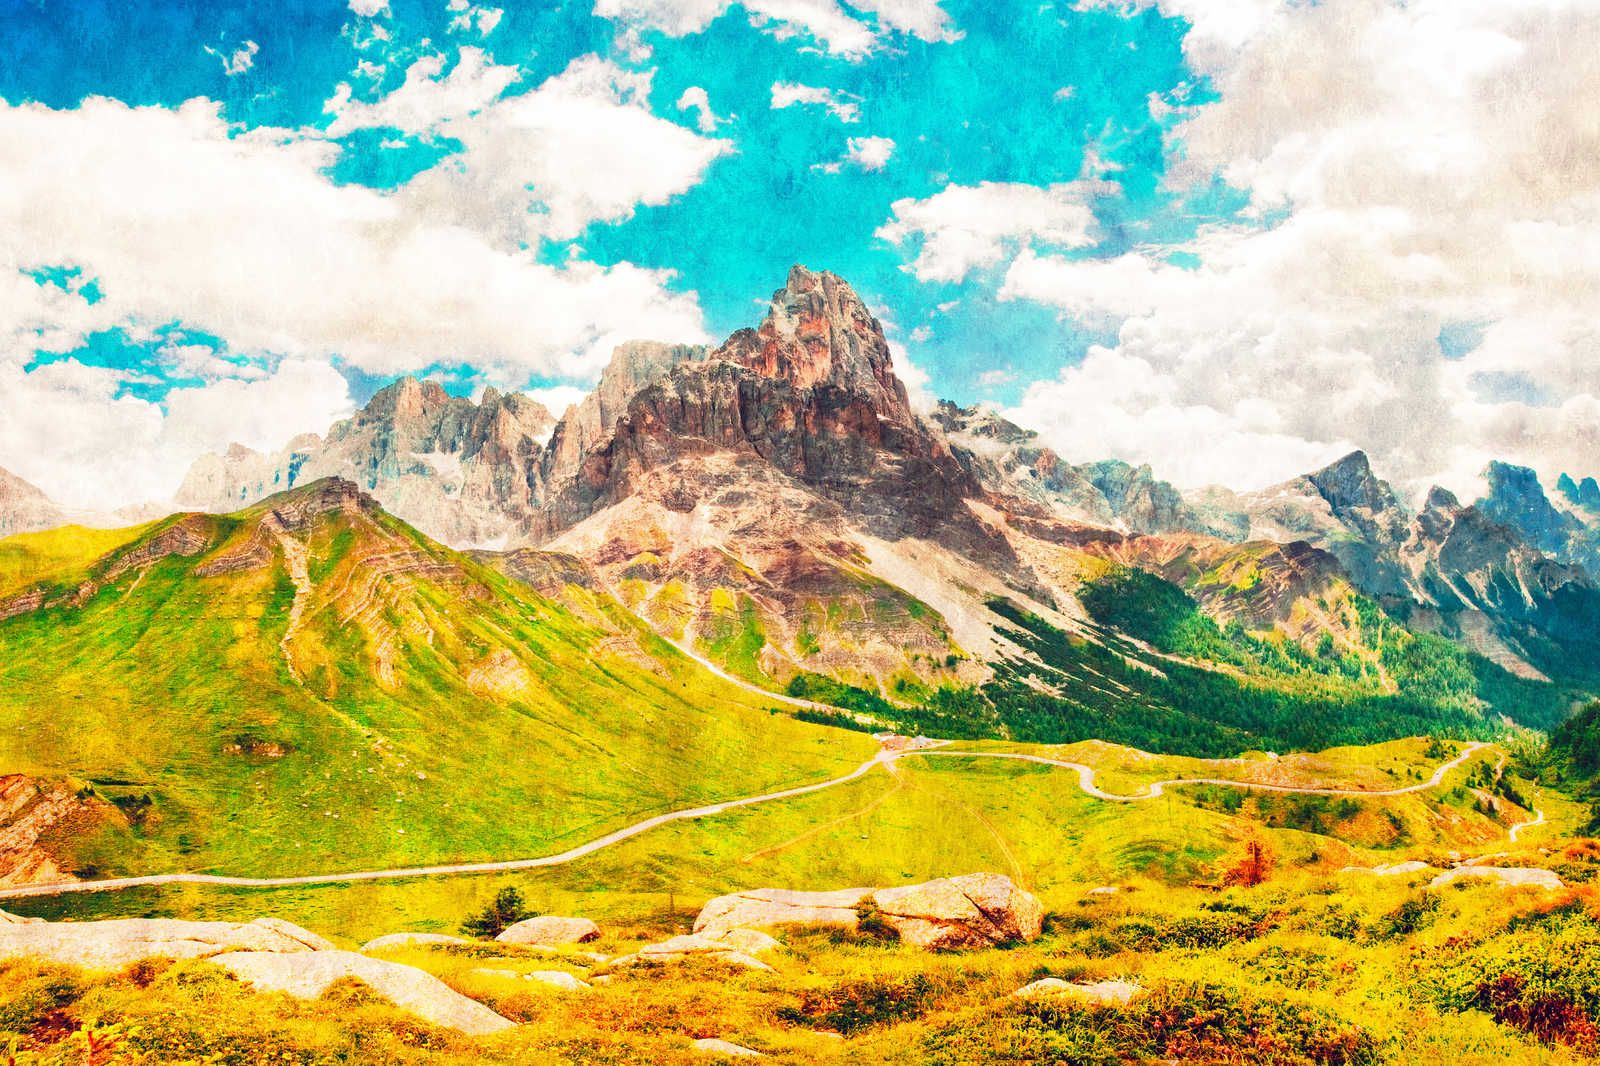             Dolomiti 1 - Canvas painting Dolomites Retro Photography - 1.20 m x 0.80 m
        